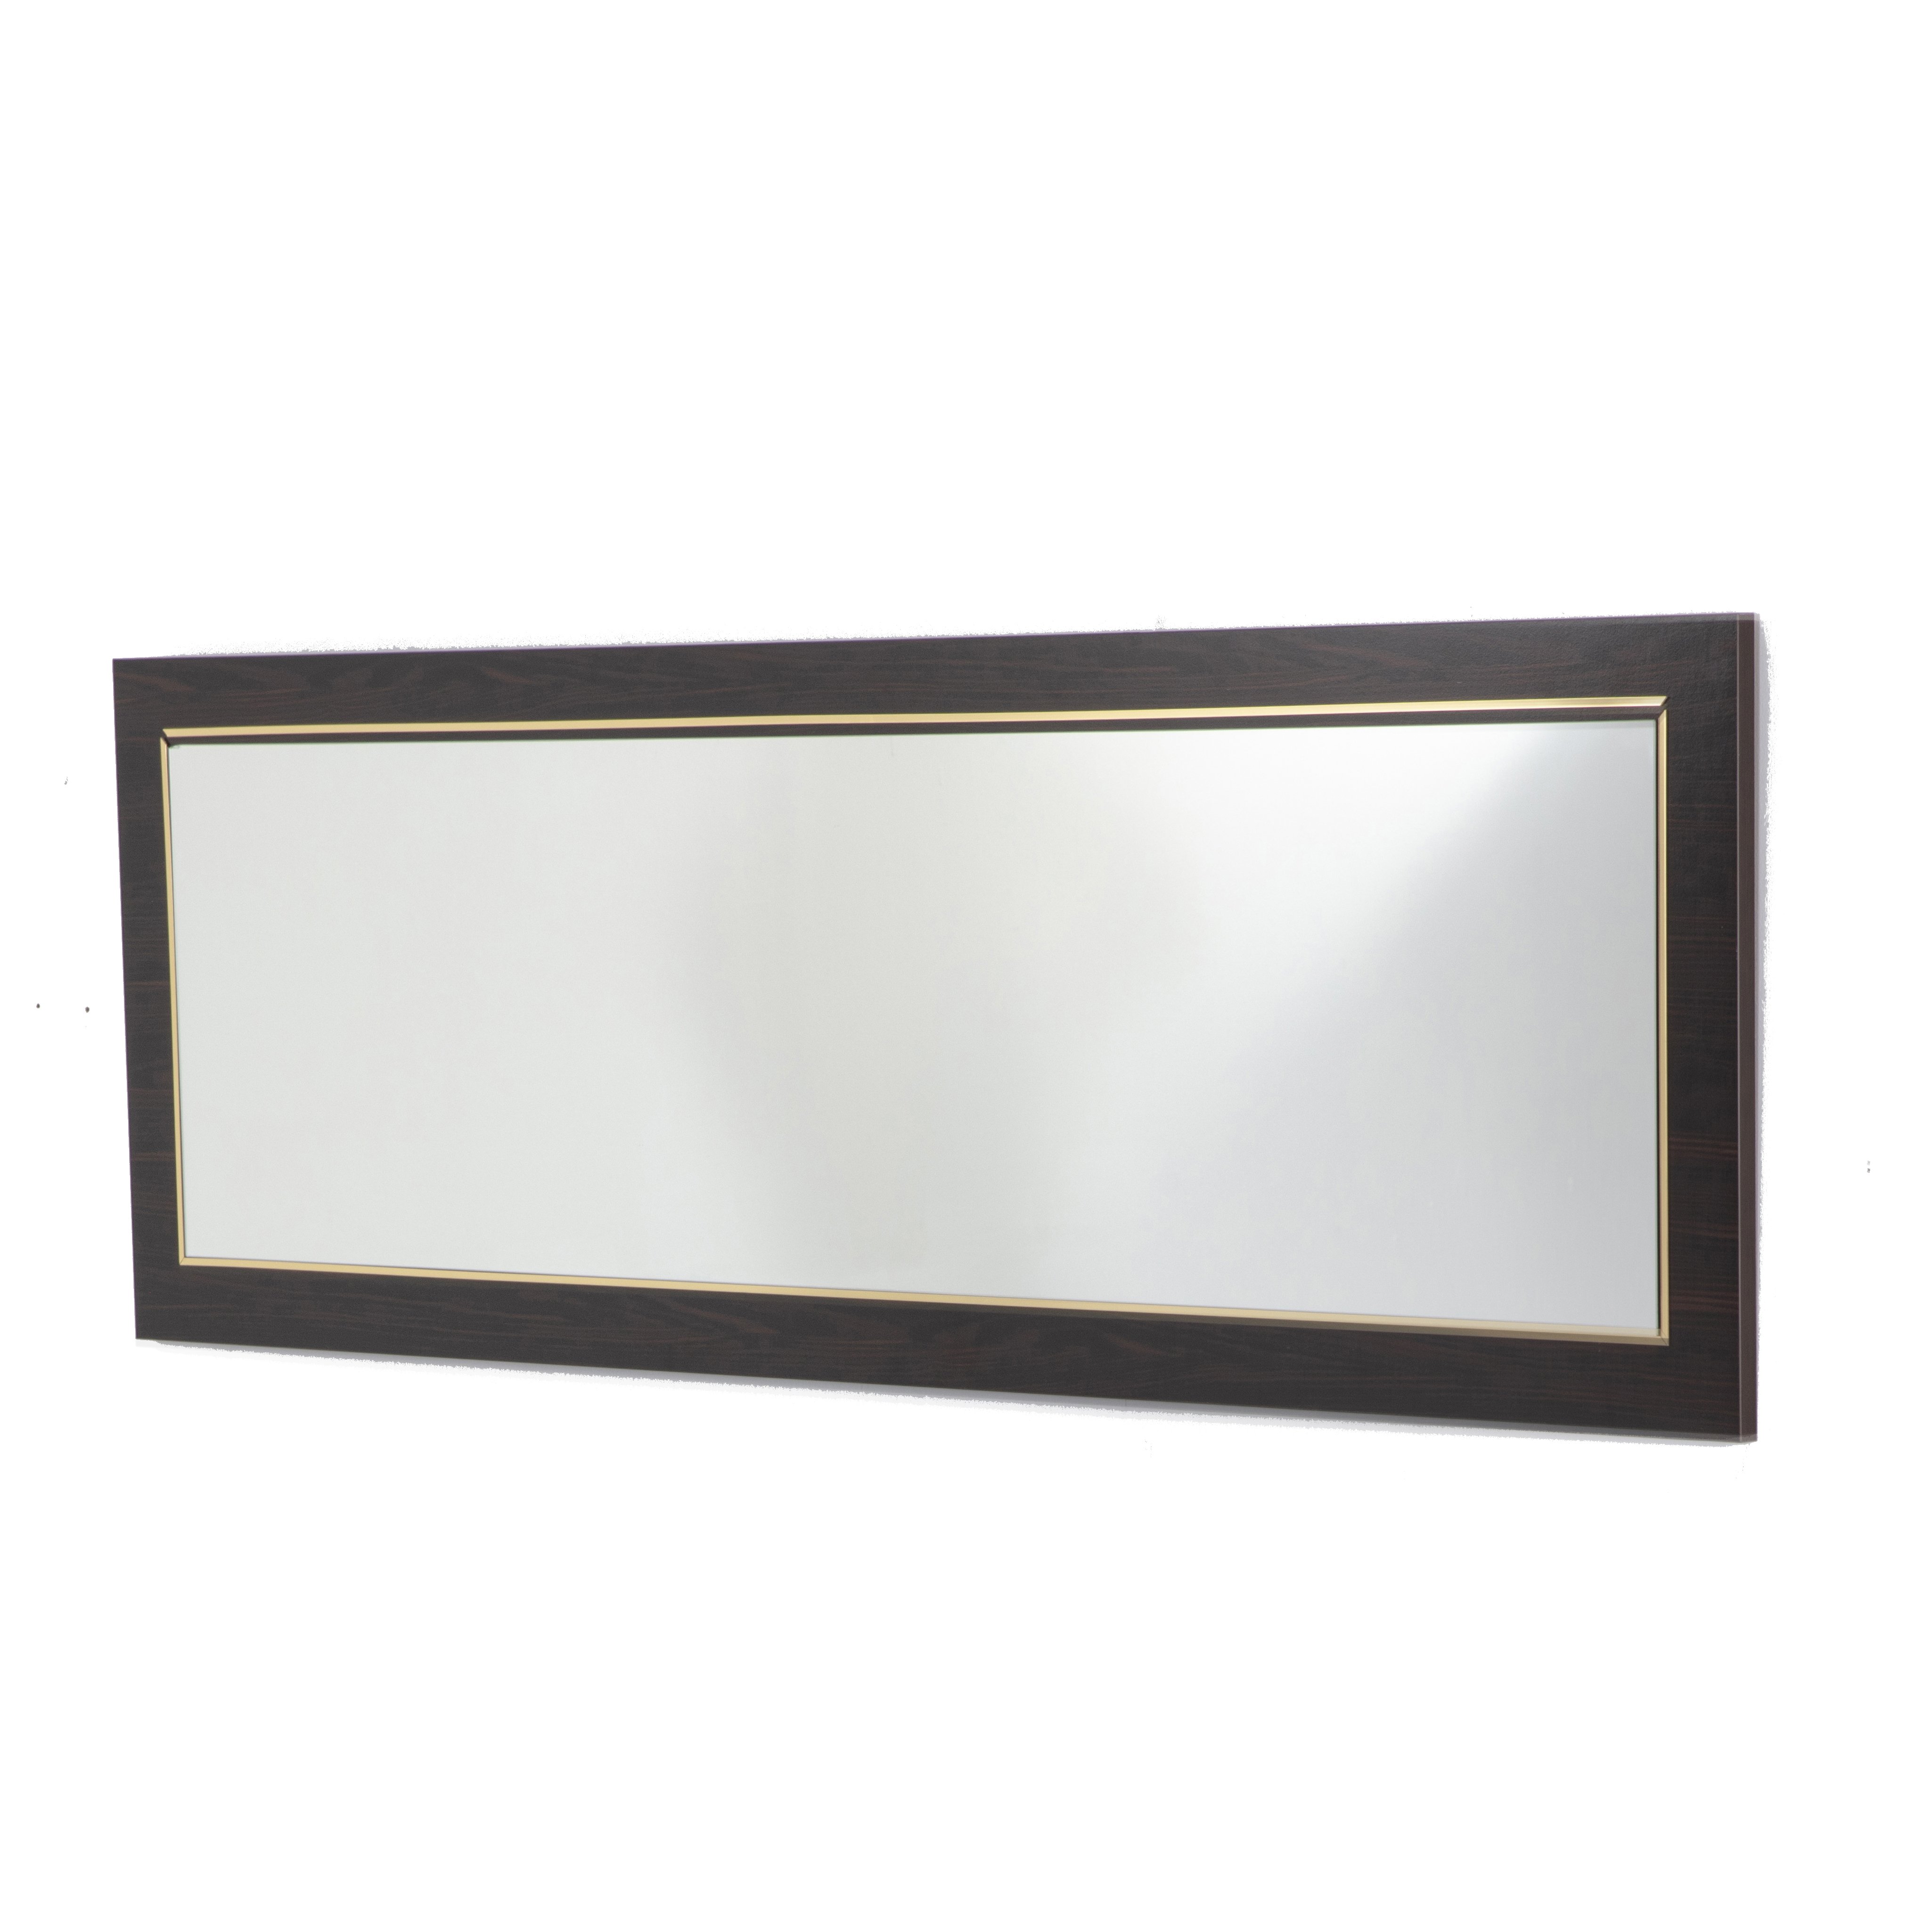 Зеркало для буфета Bellona Legenda цвет: венге, размер 169х2х59 см  (LEGN-11) остаткиLEGN-11